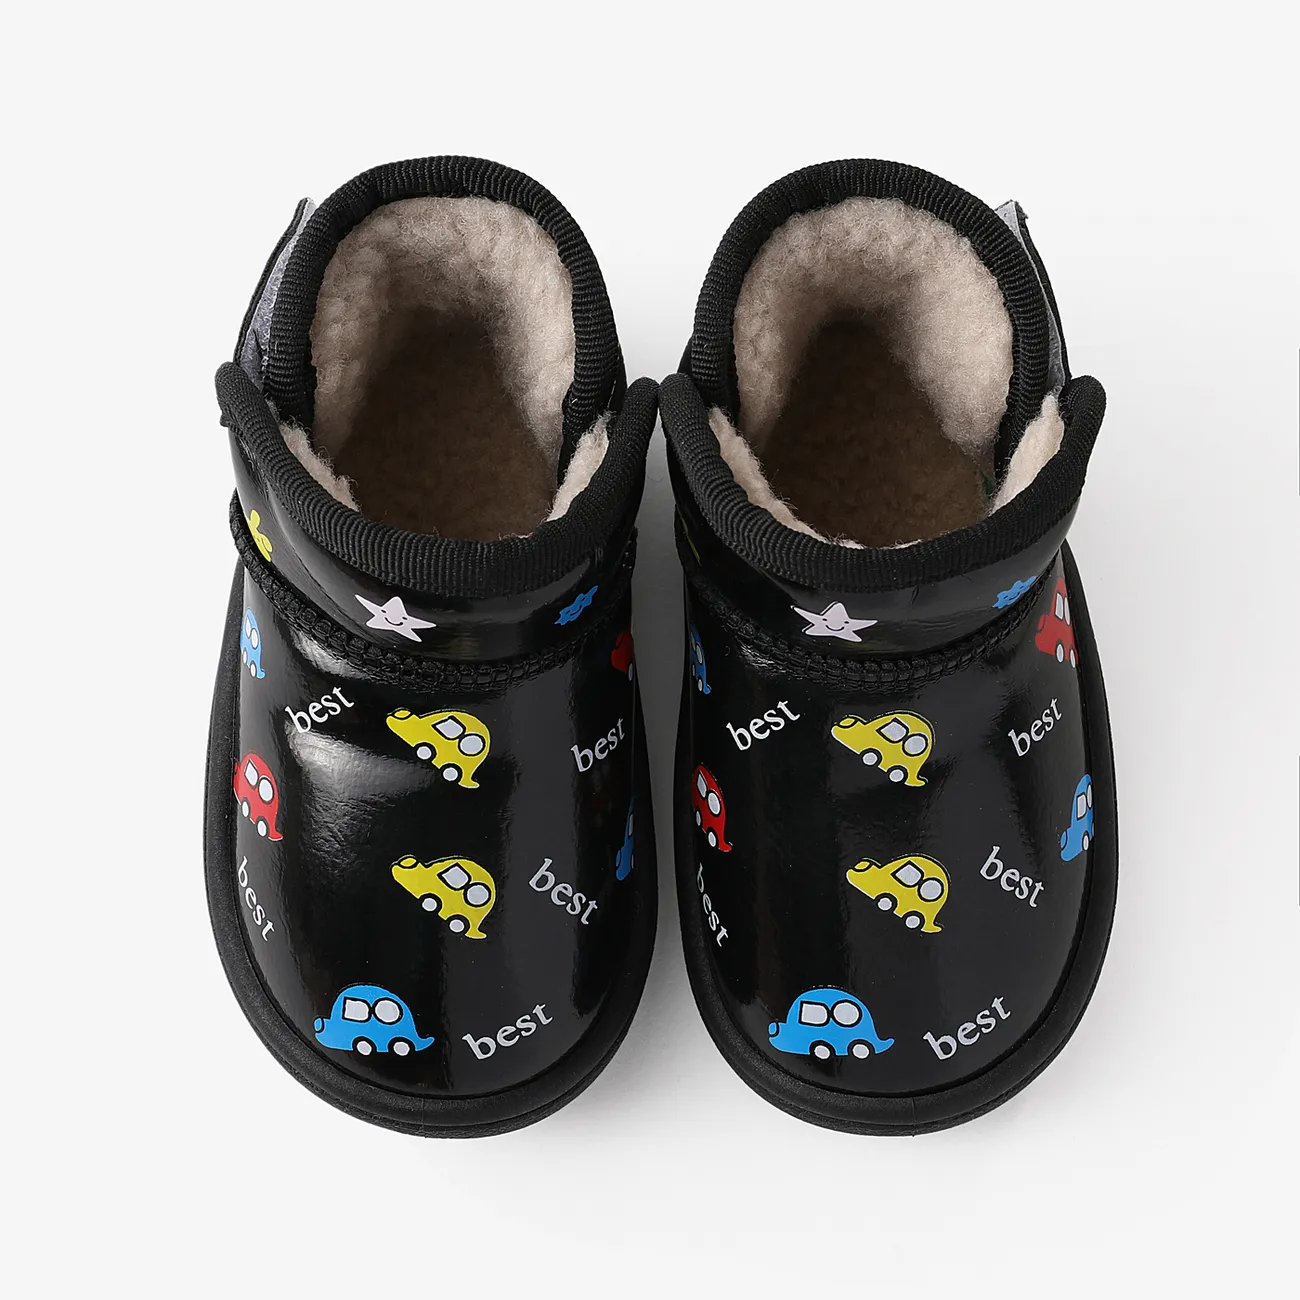 Toddler & Kids Childlike Cartoon Vehicle & Rabbit Print Fleece Snow Boots Black big image 1